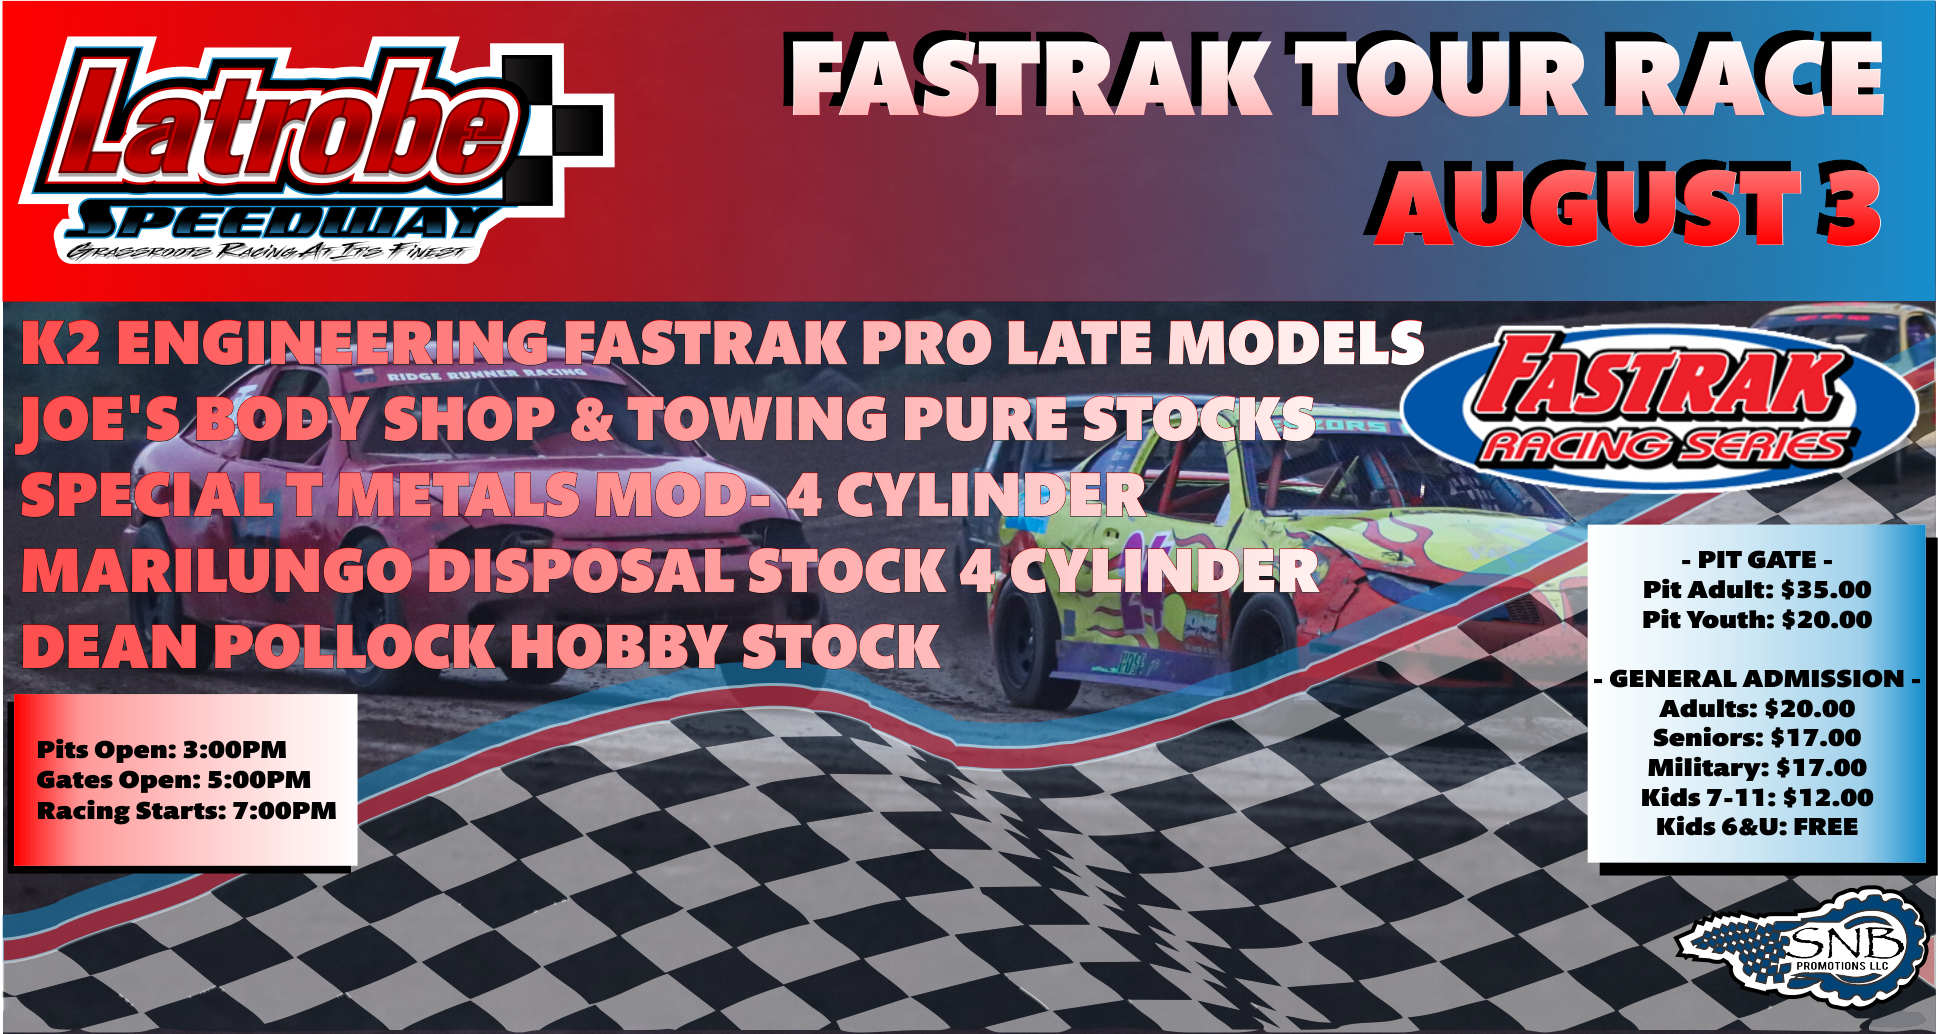 FASTRAK TOUR RACE